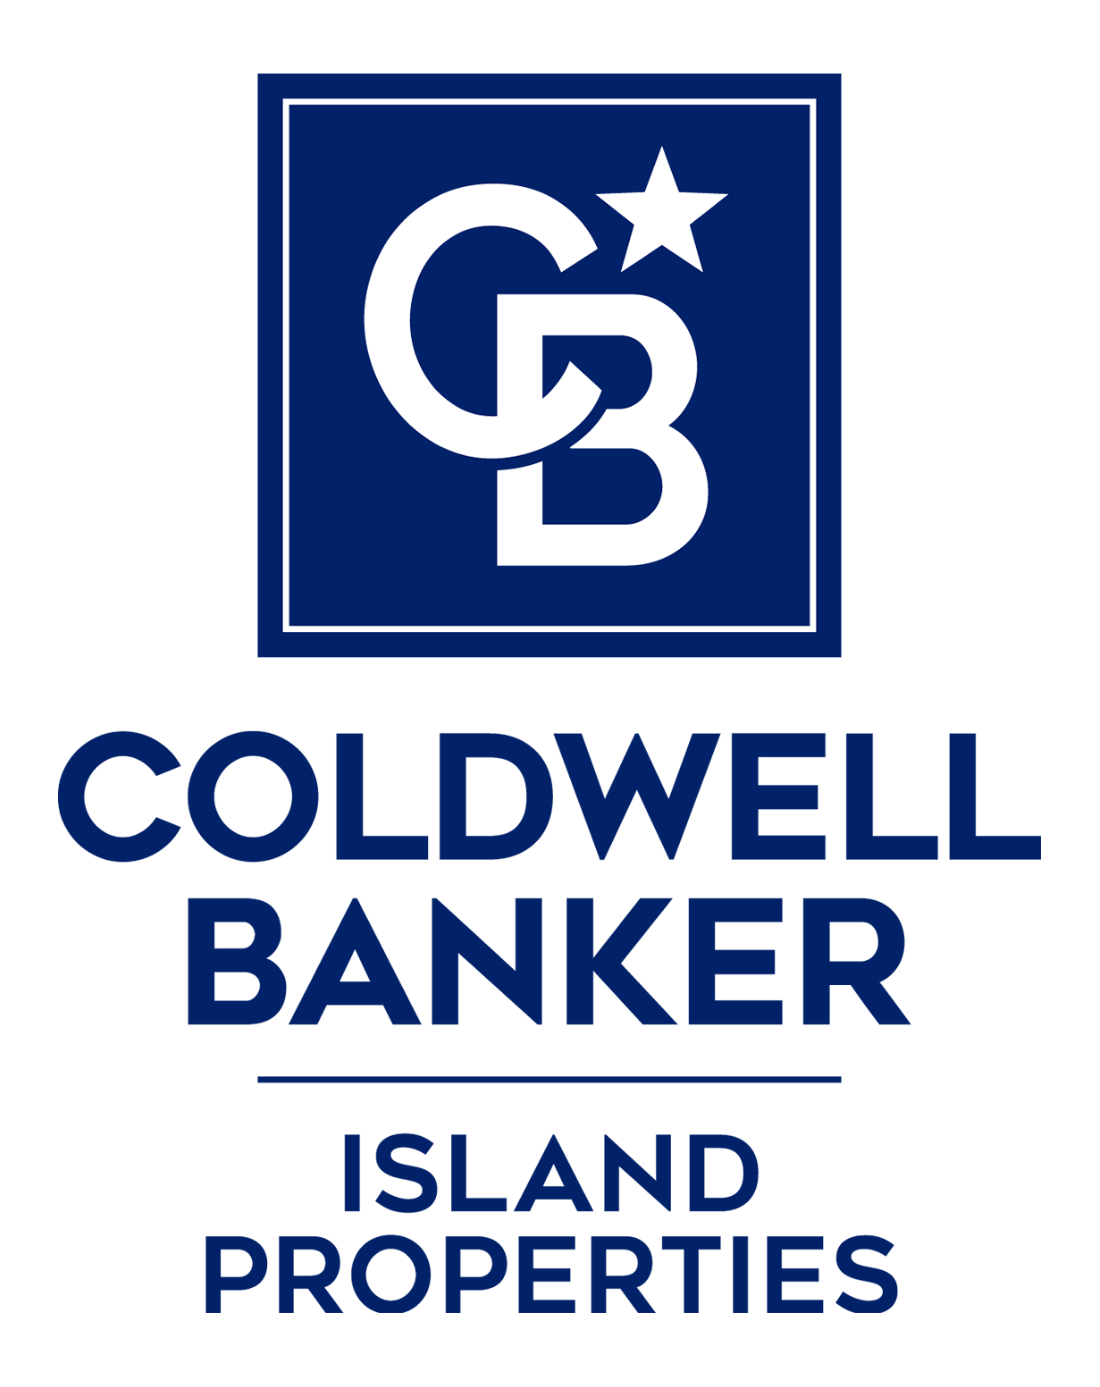 Benjamin Easley - Coldwell Banker Island Properties Logo